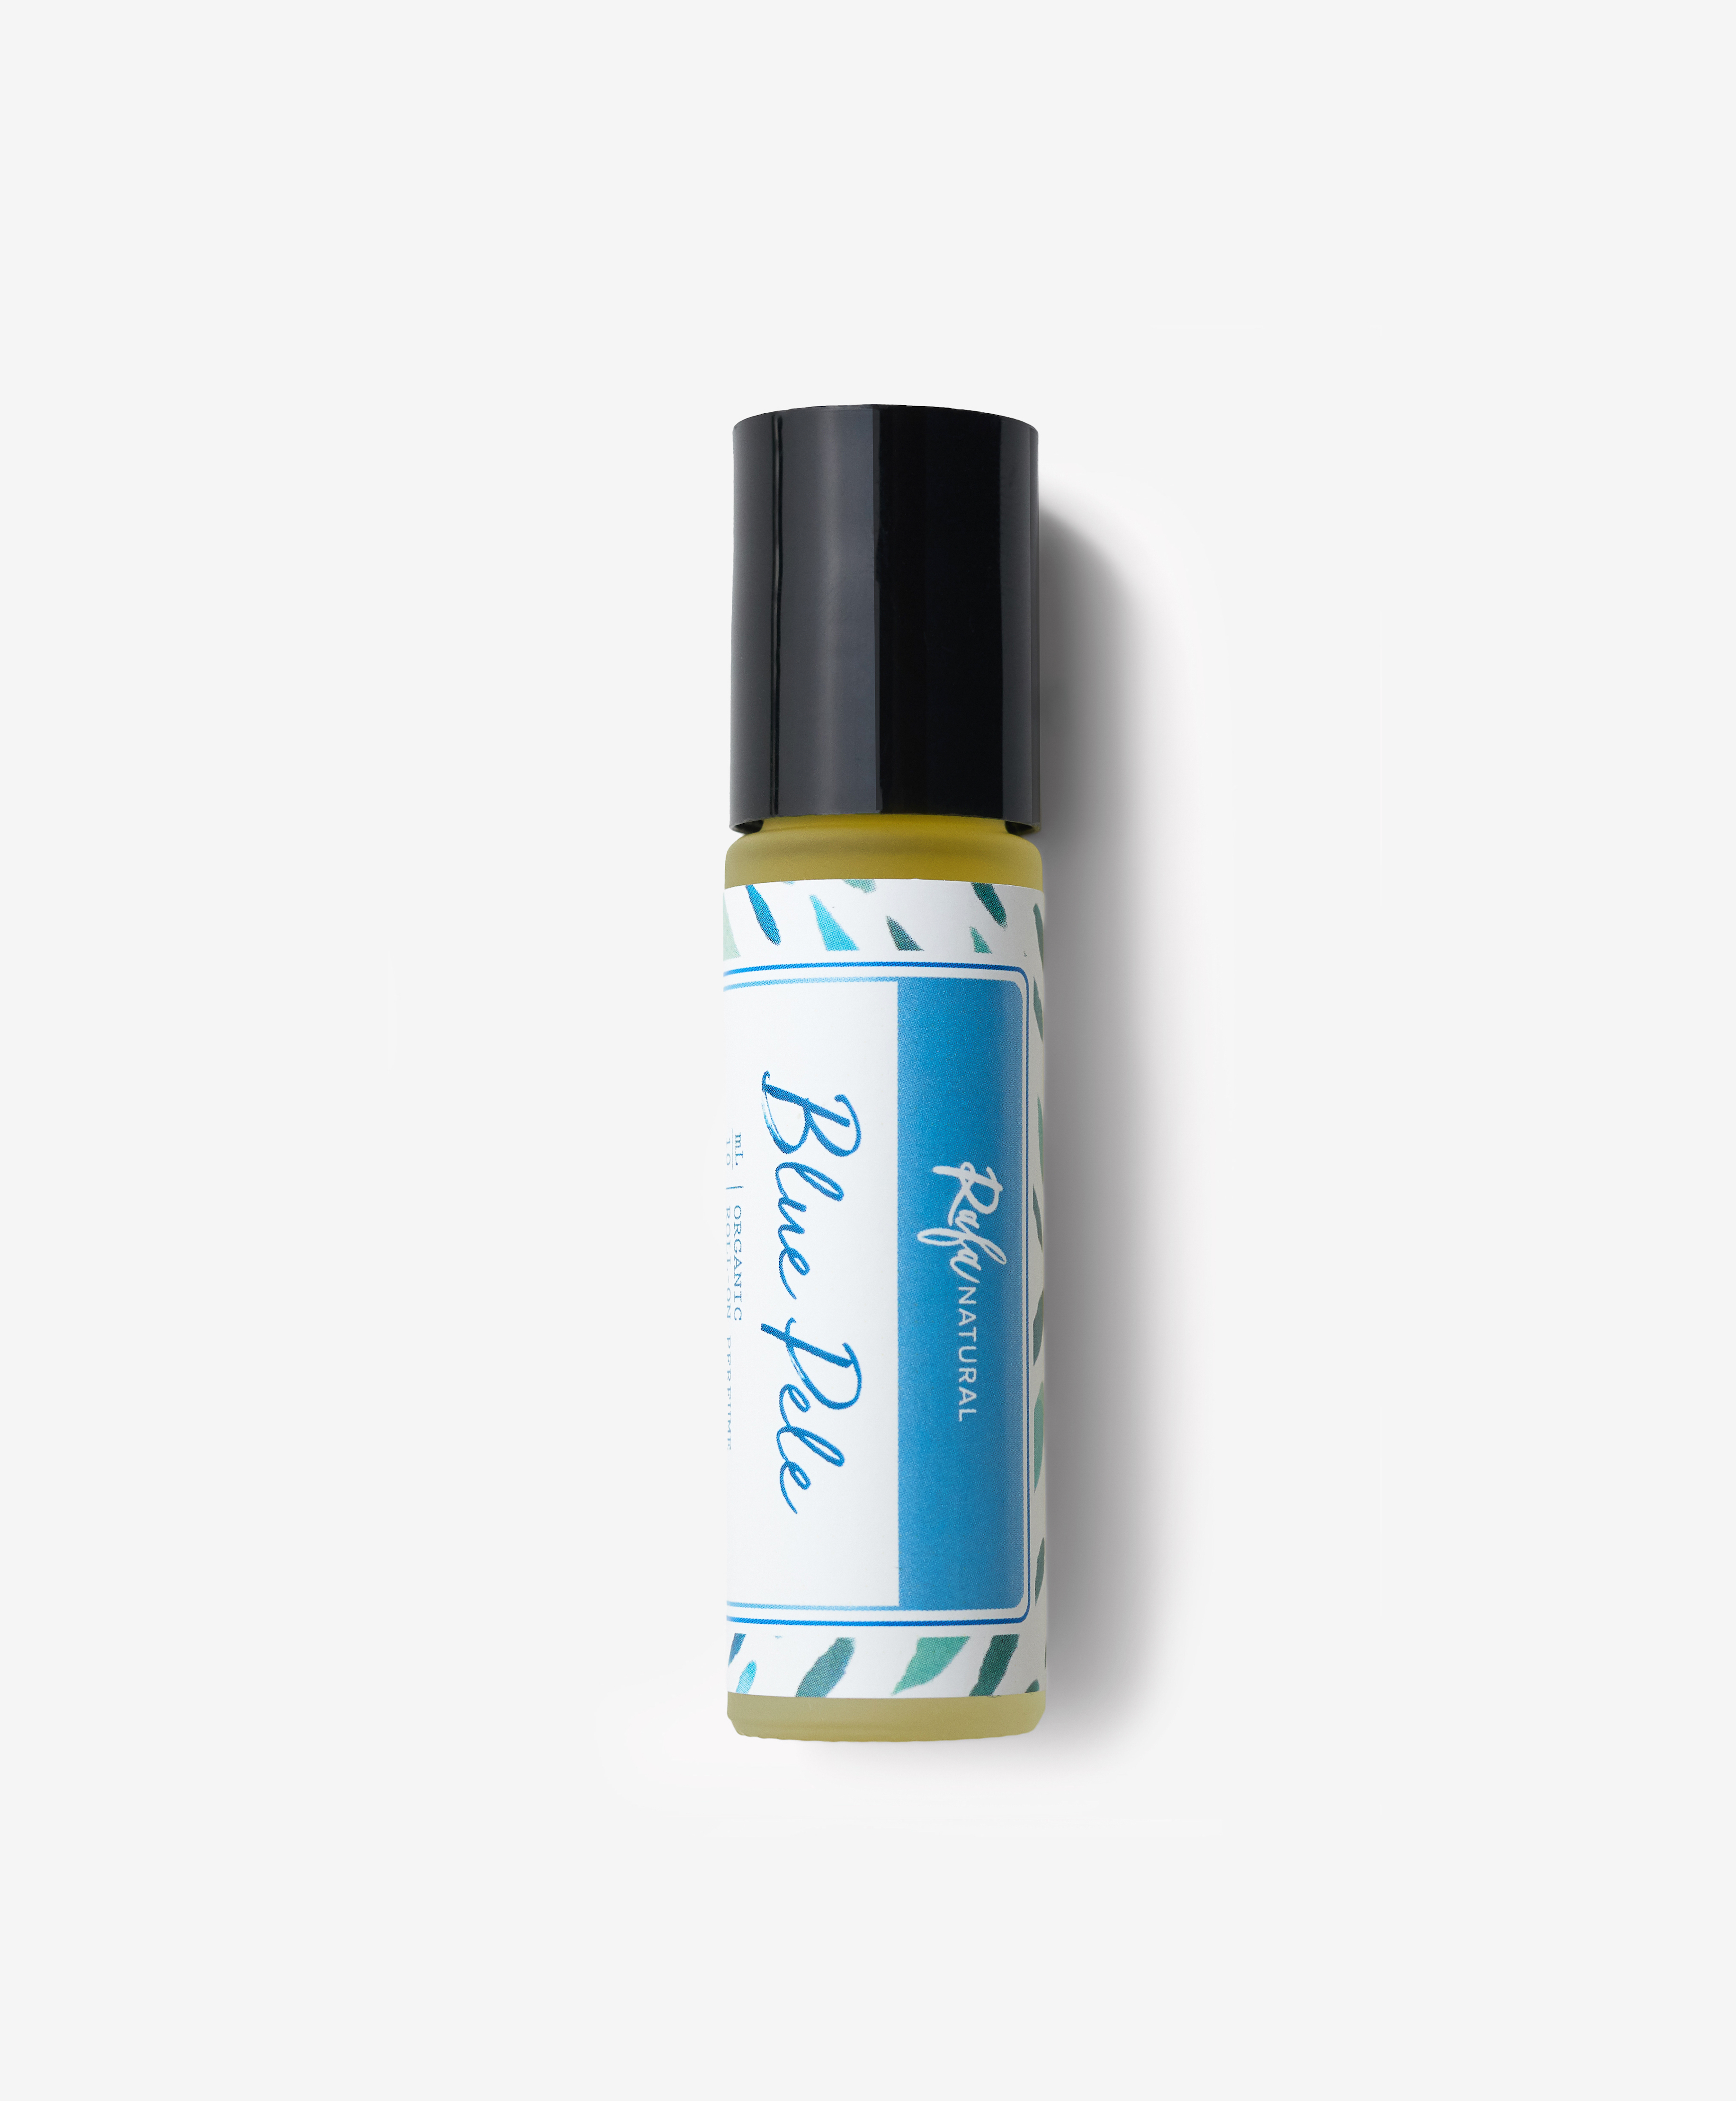 Blue Pele Perfume Roller by Rafa Natural